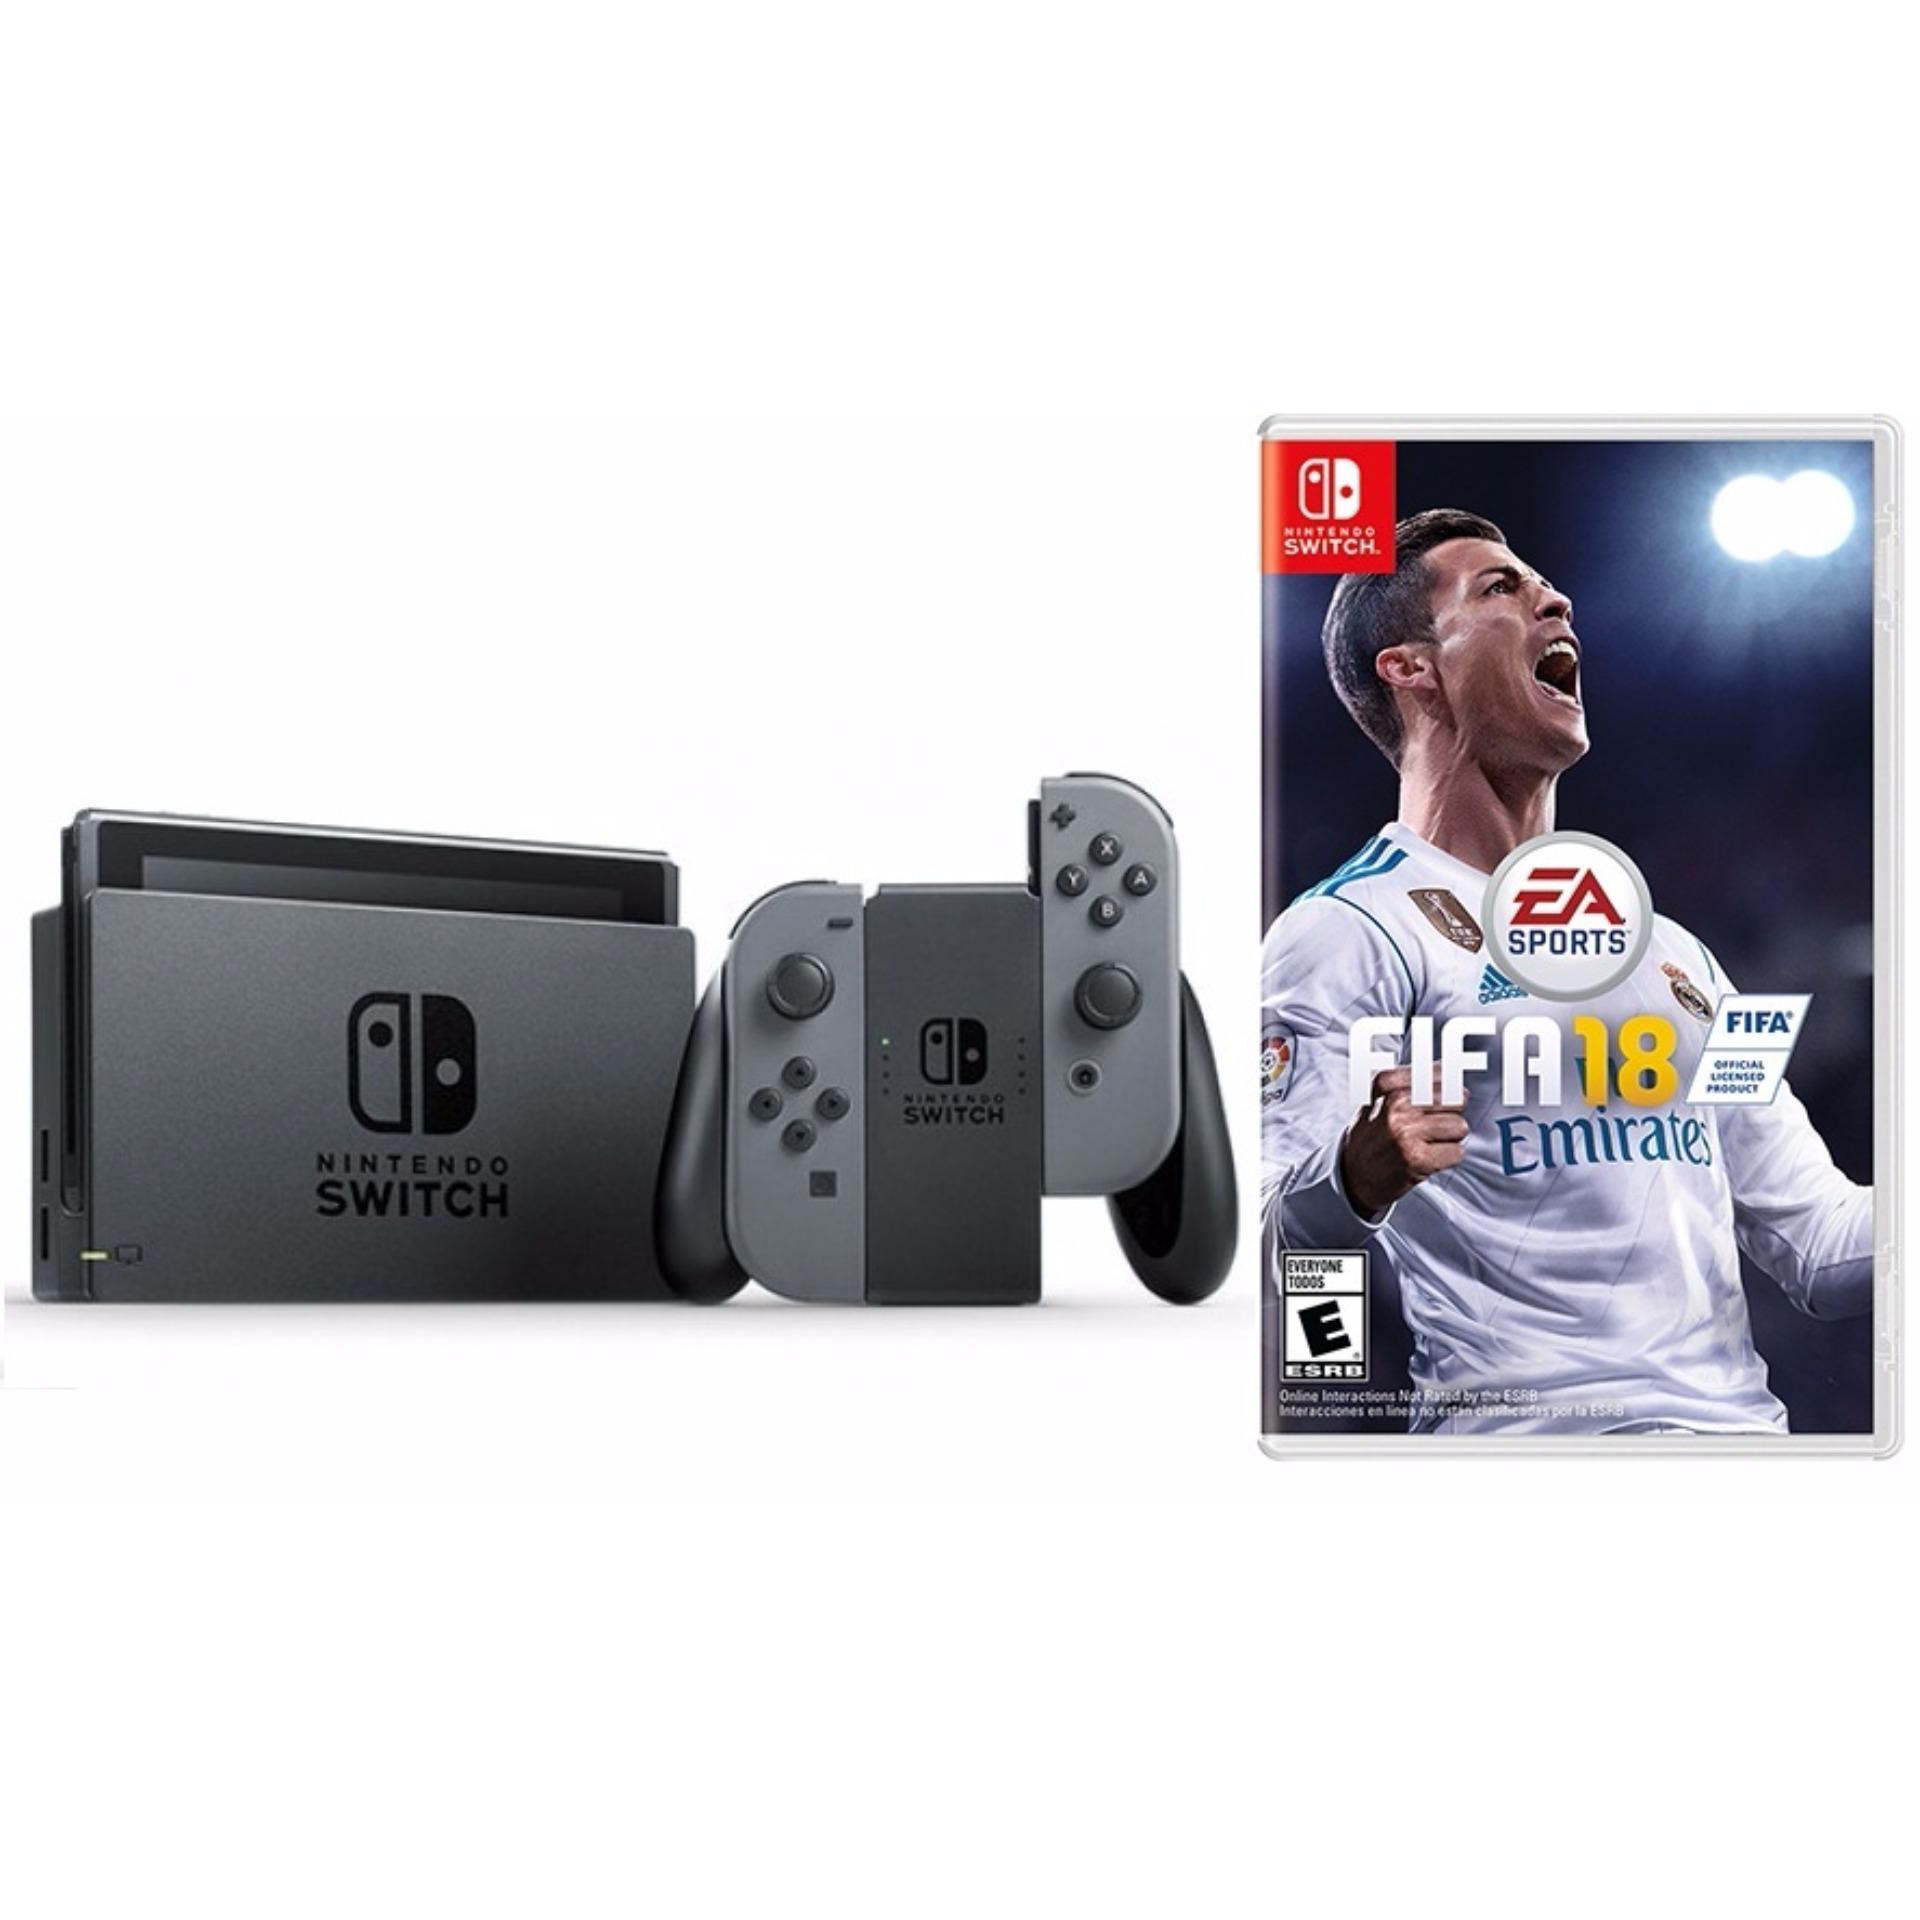 Máy chơi game Nintendo Switch + Game FIFA 18